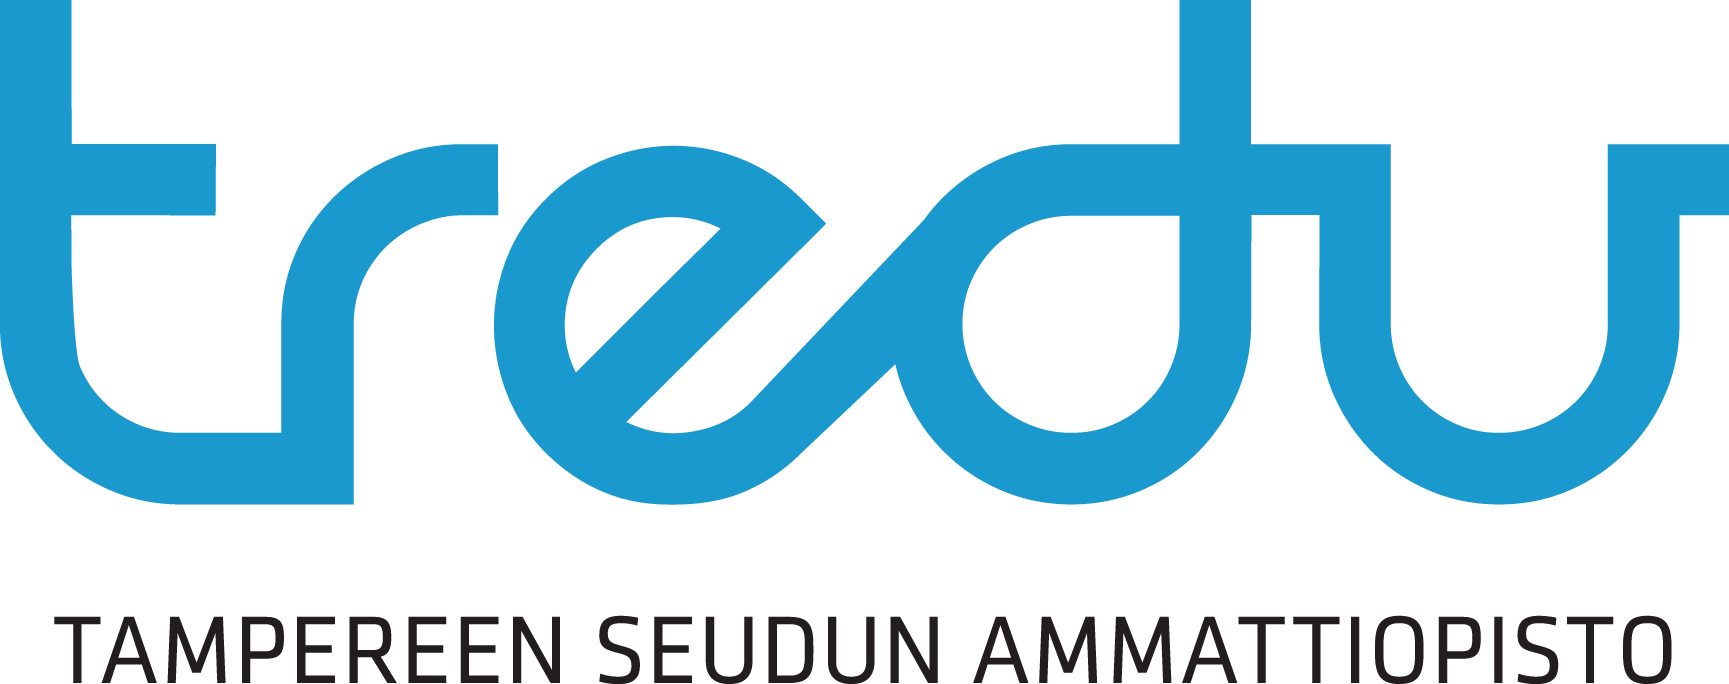 Tredun logo